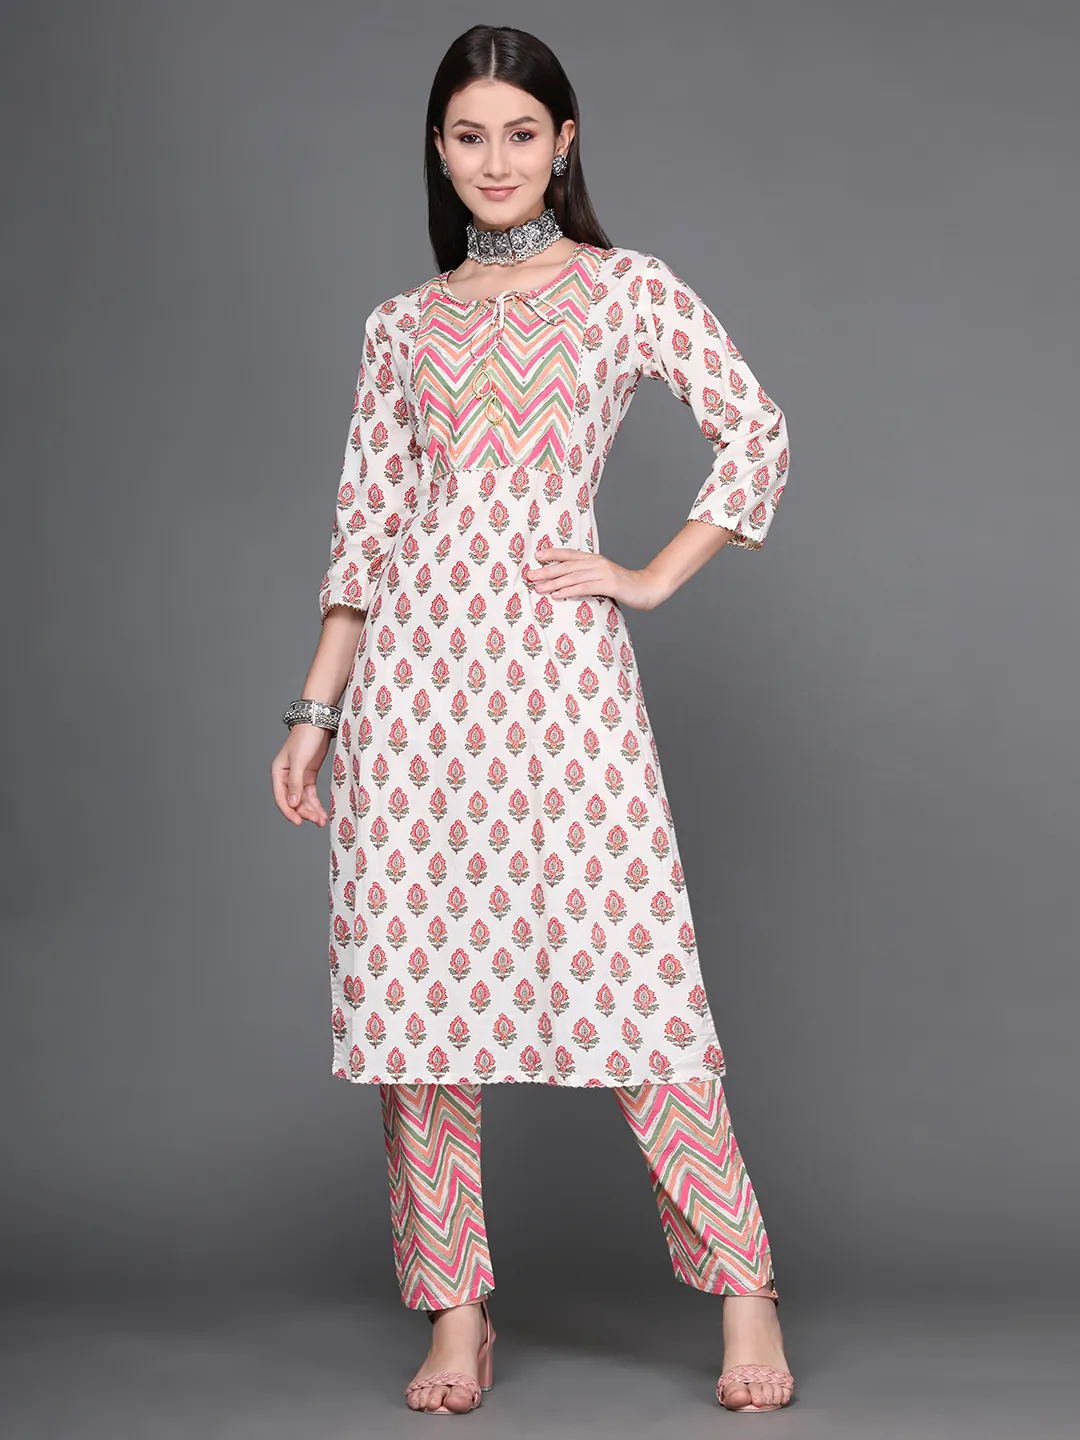 Shop Indian Clothing Online for Men, Women & Kids | Myntra